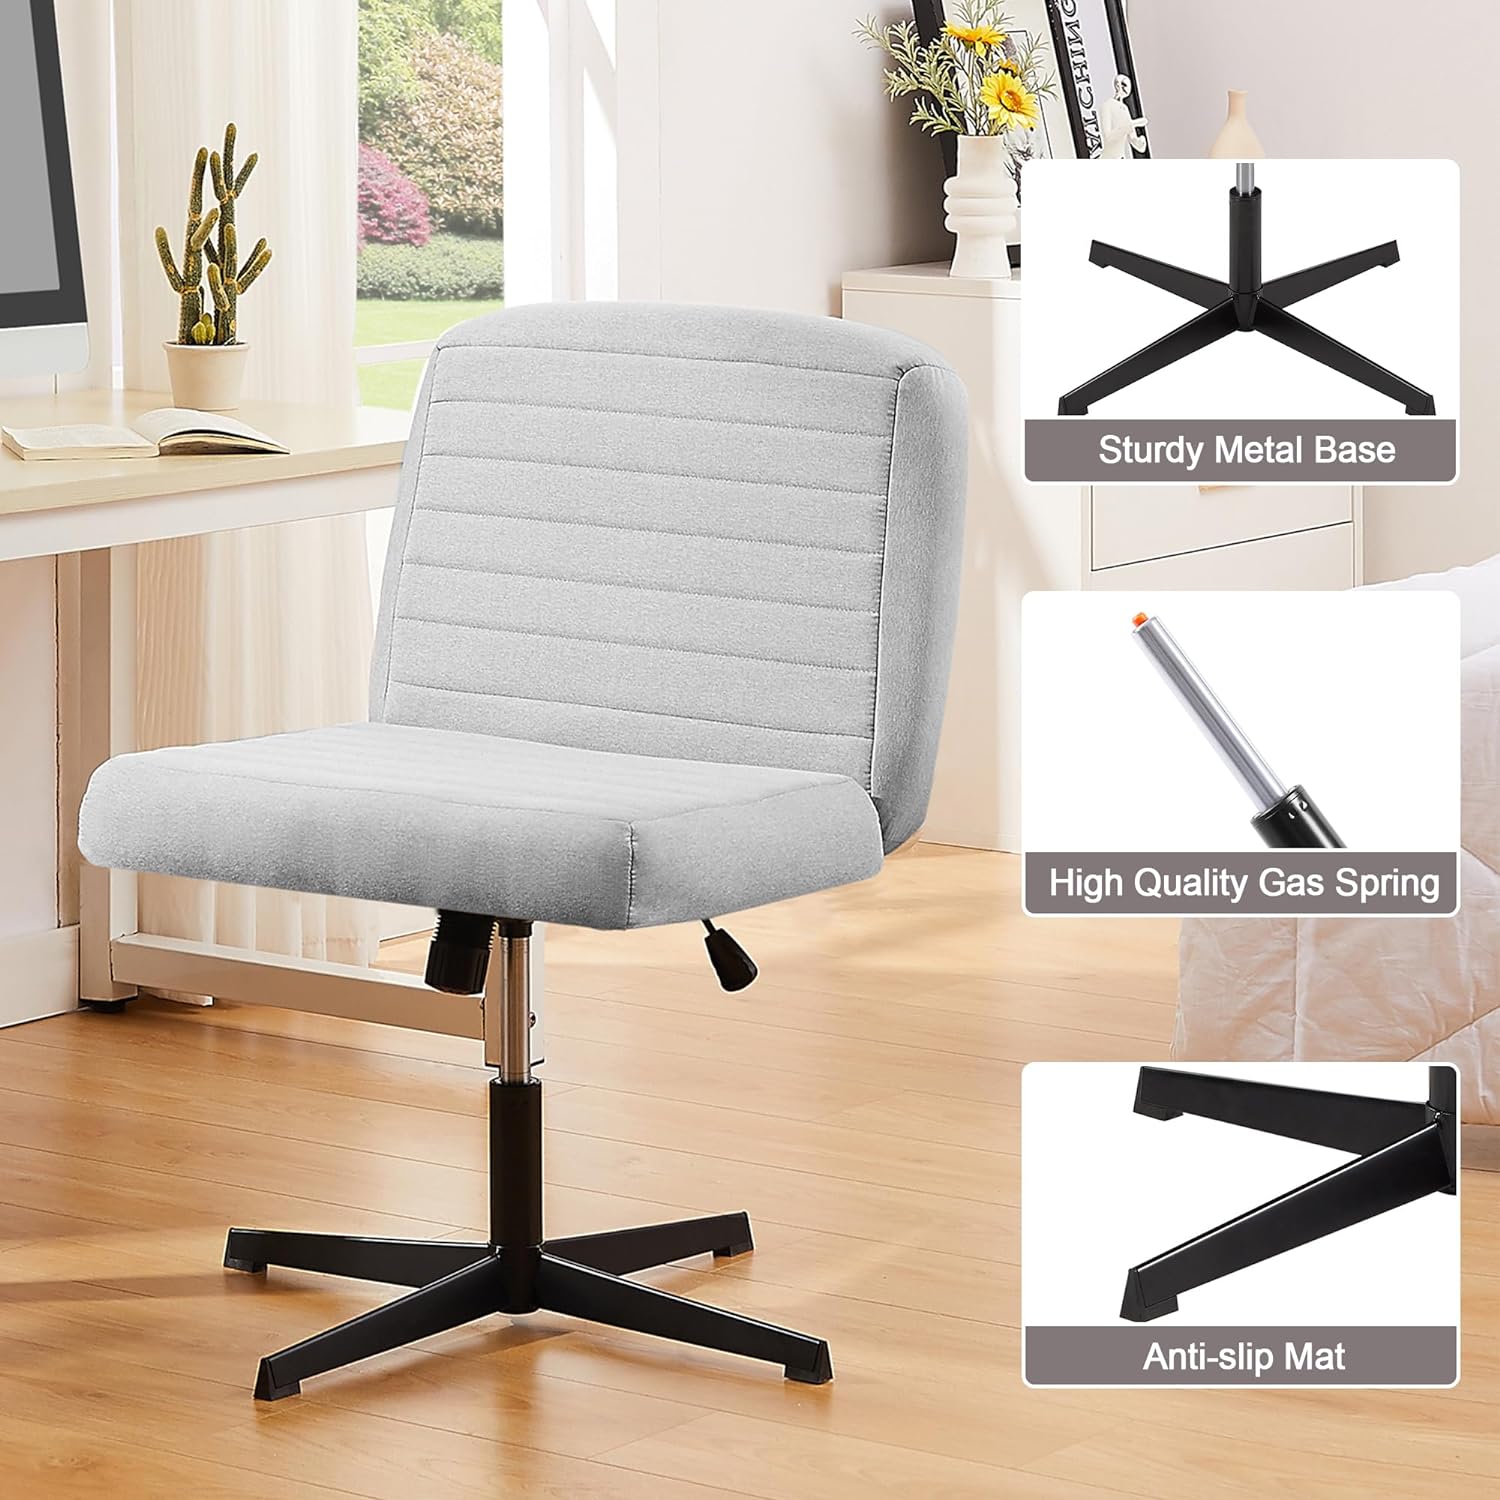 VECELO Criss Cross Armless Office Desk Chair No Wheels Comfy Wide Fabr